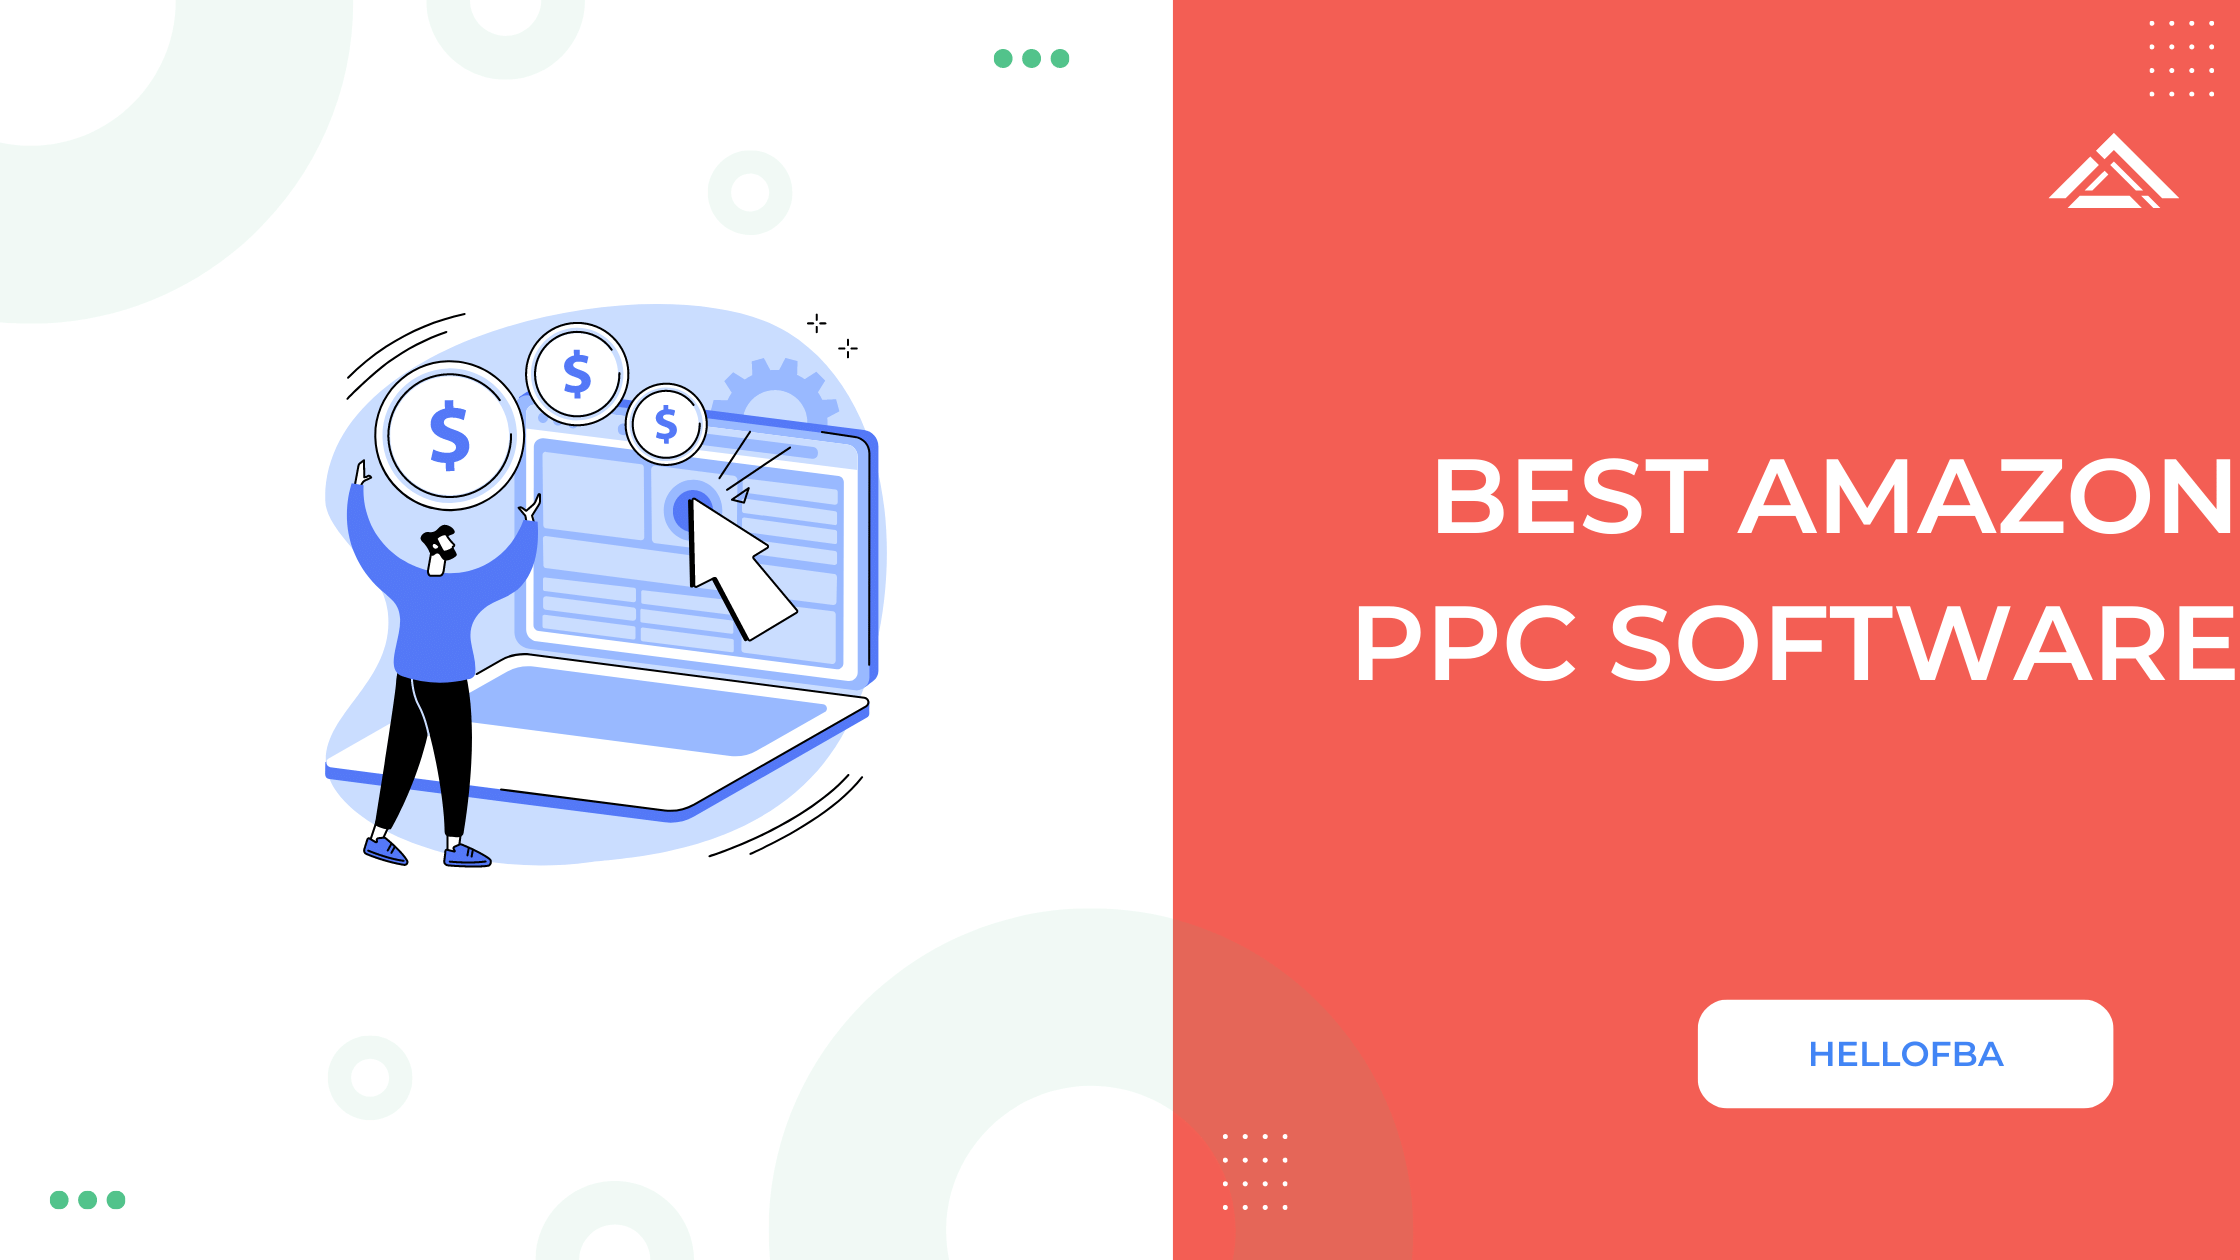 Best Amazon PPC Software - HelloFBA